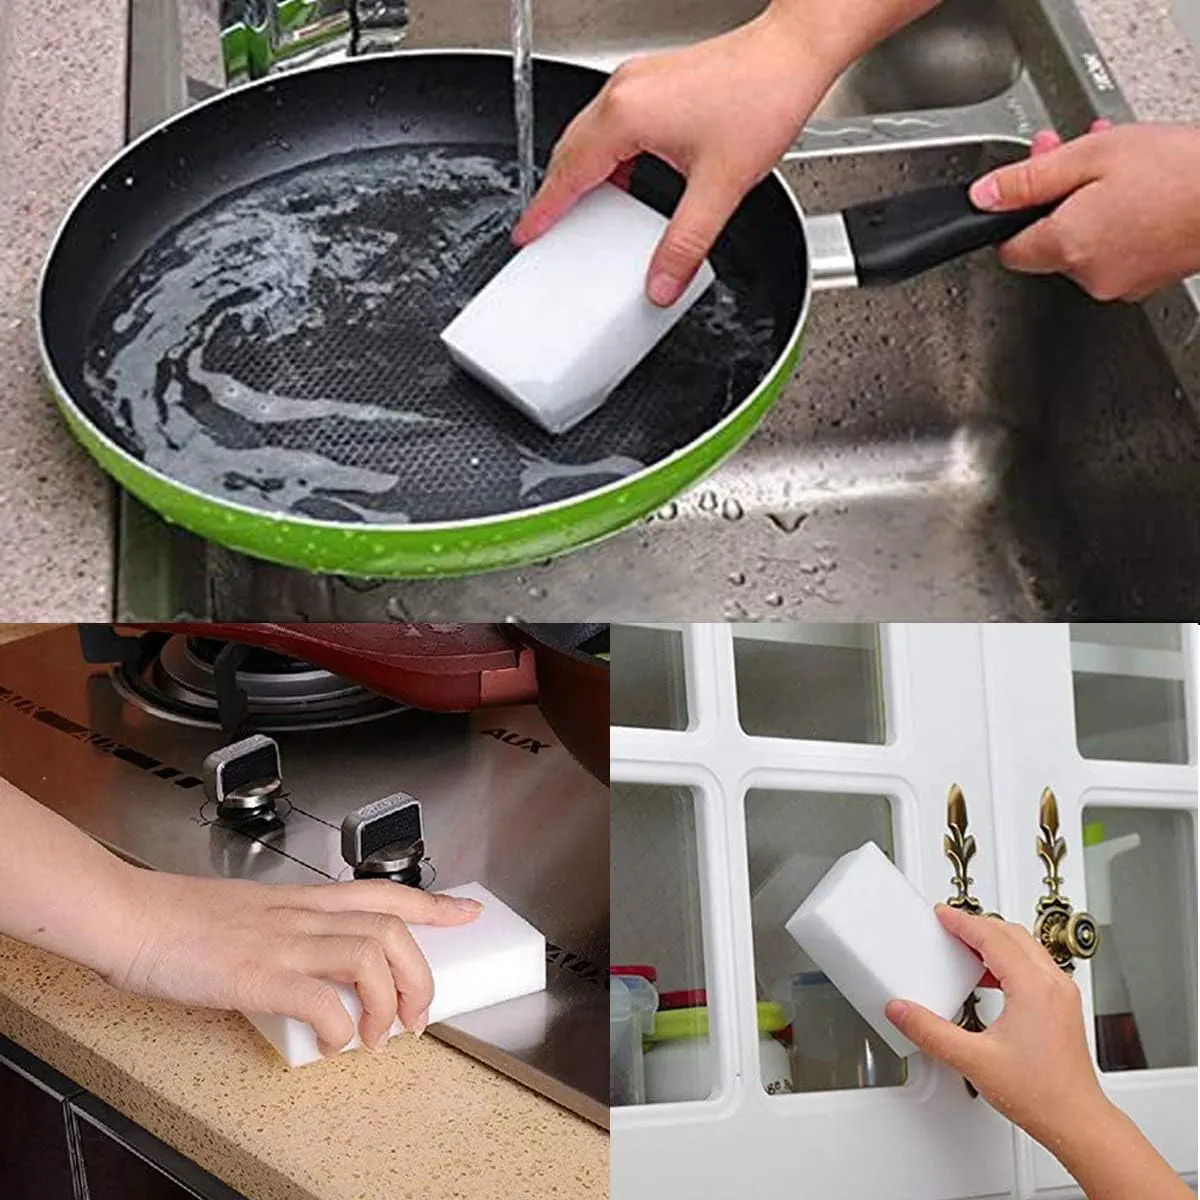 Magic cleaning sponge, white